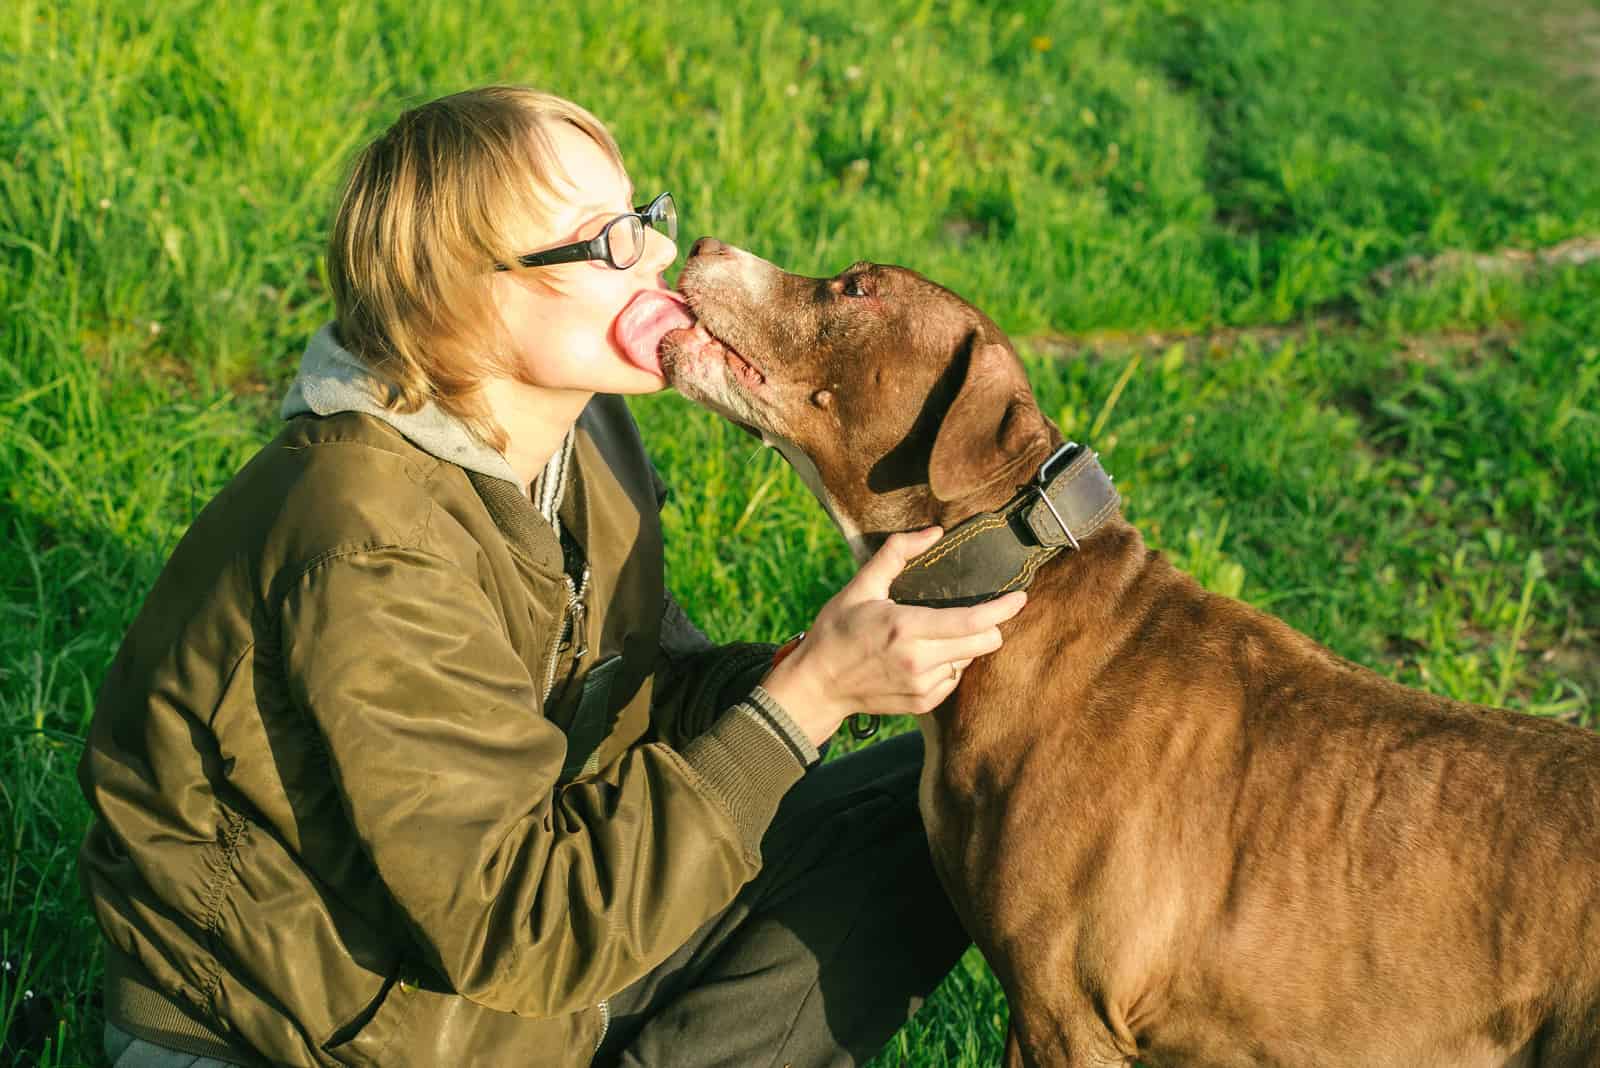 dog licking woman